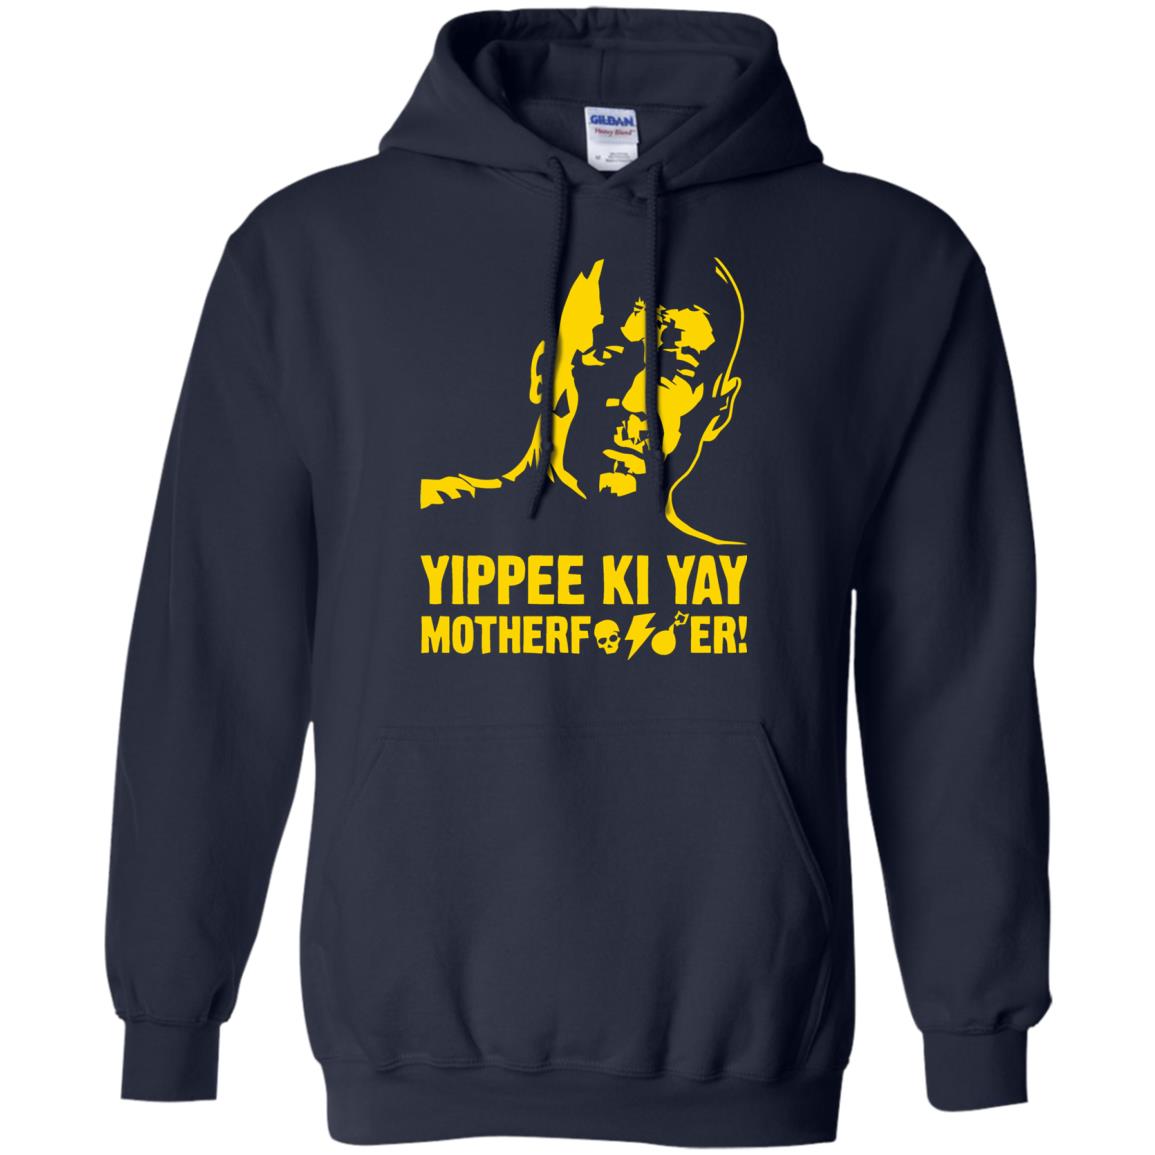 yippee ki yay hoodie - navy blue